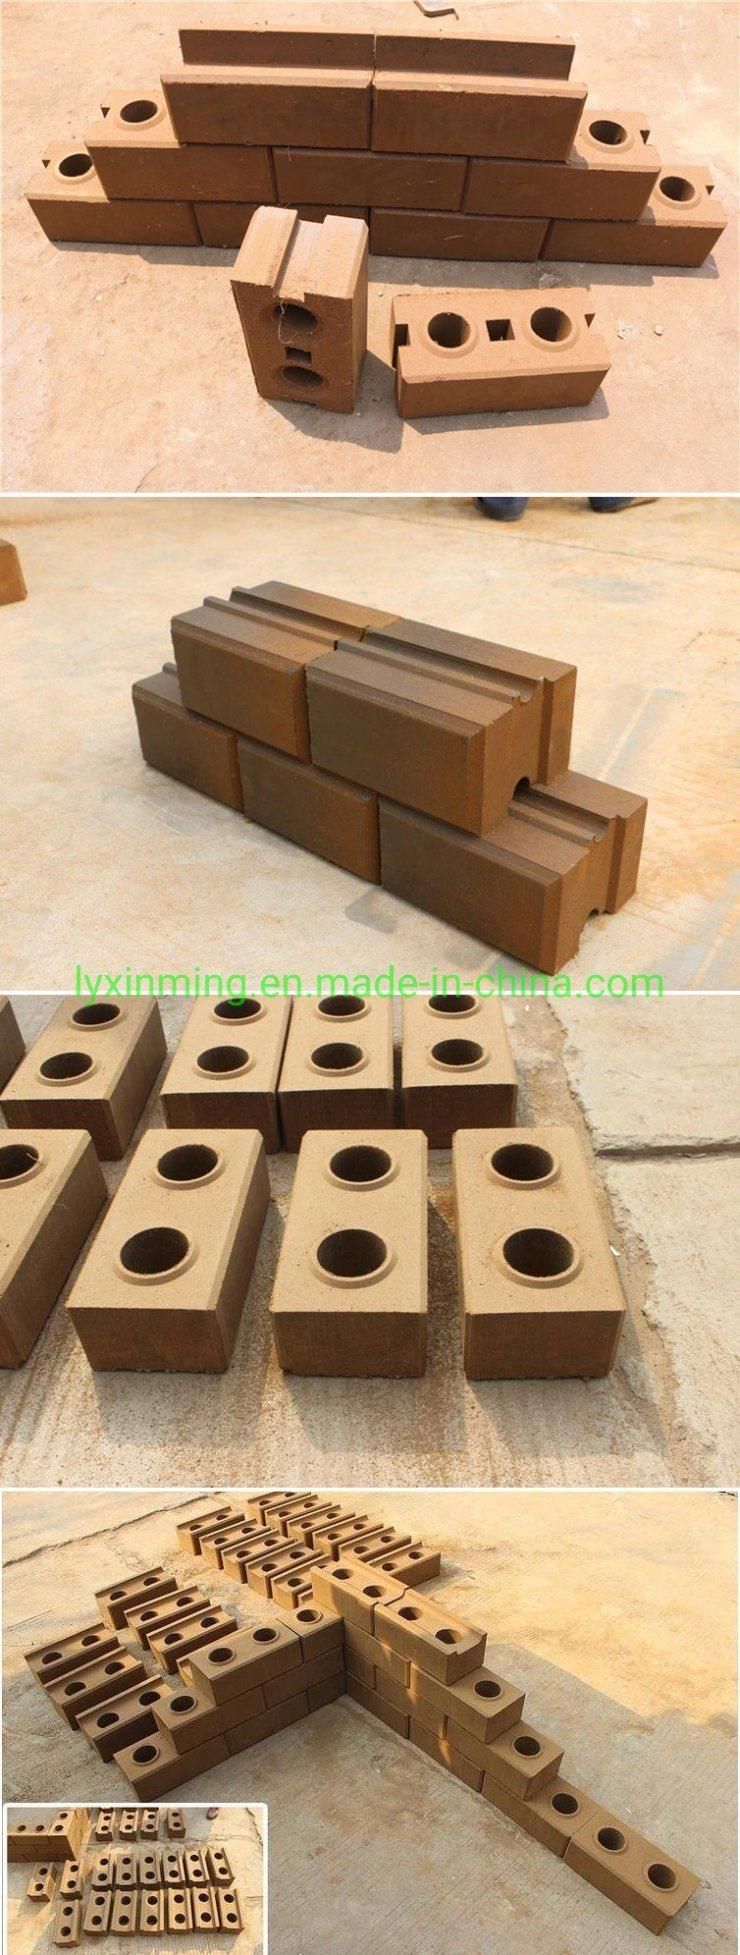 Xinming Xm2-40 Manual Mud Interlocking Brick Making Machine Construction Block Machine